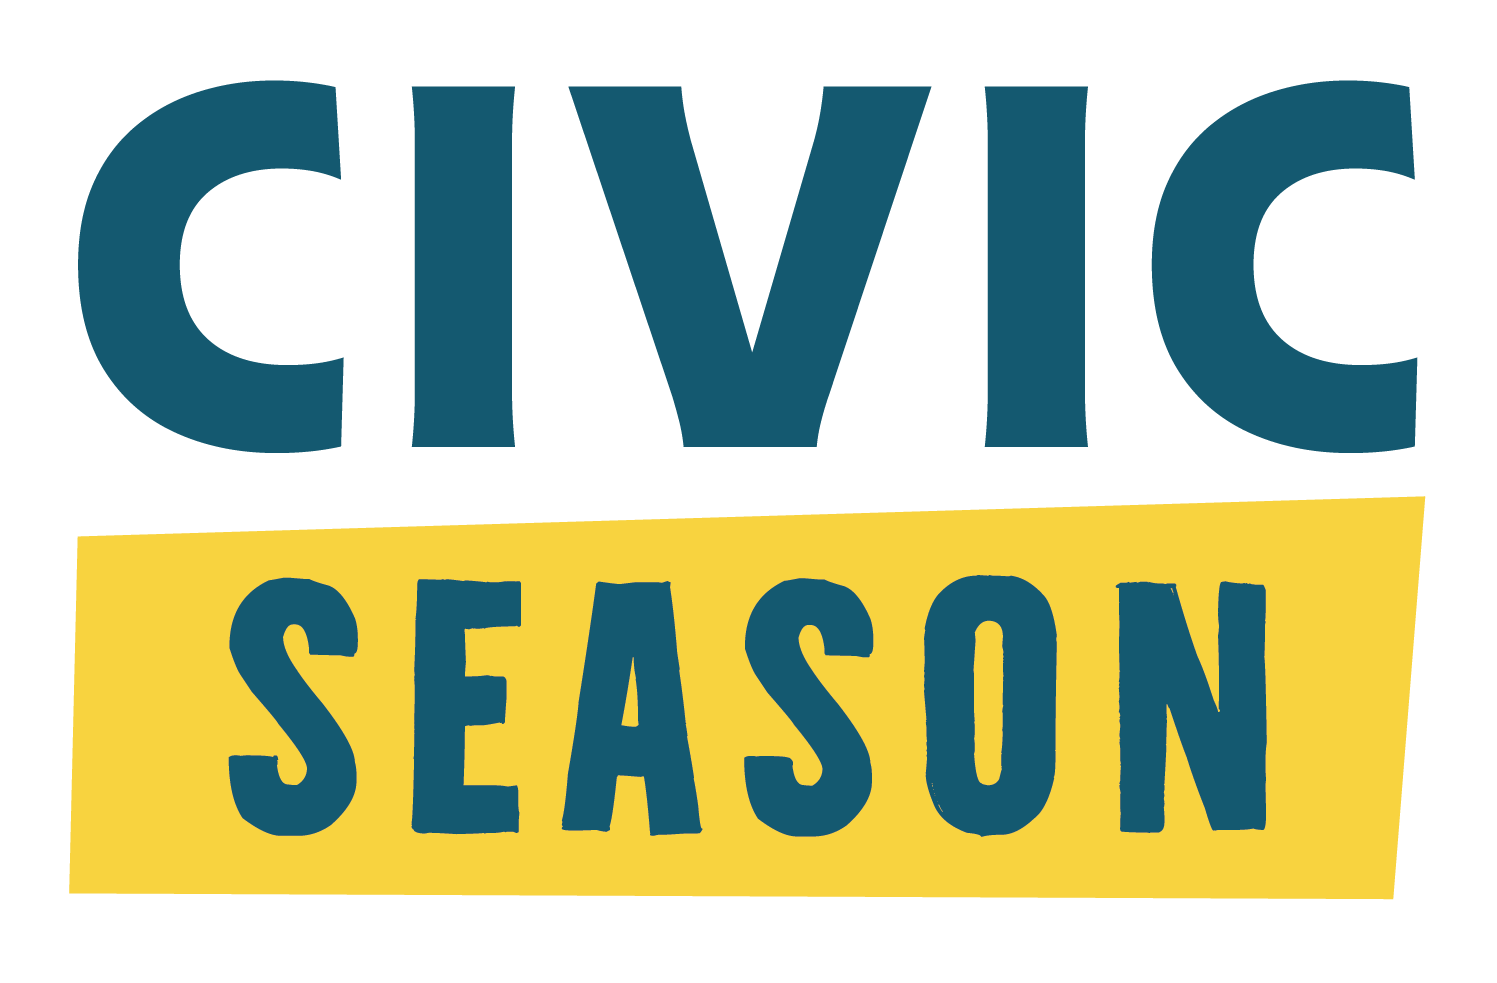 Civic Season